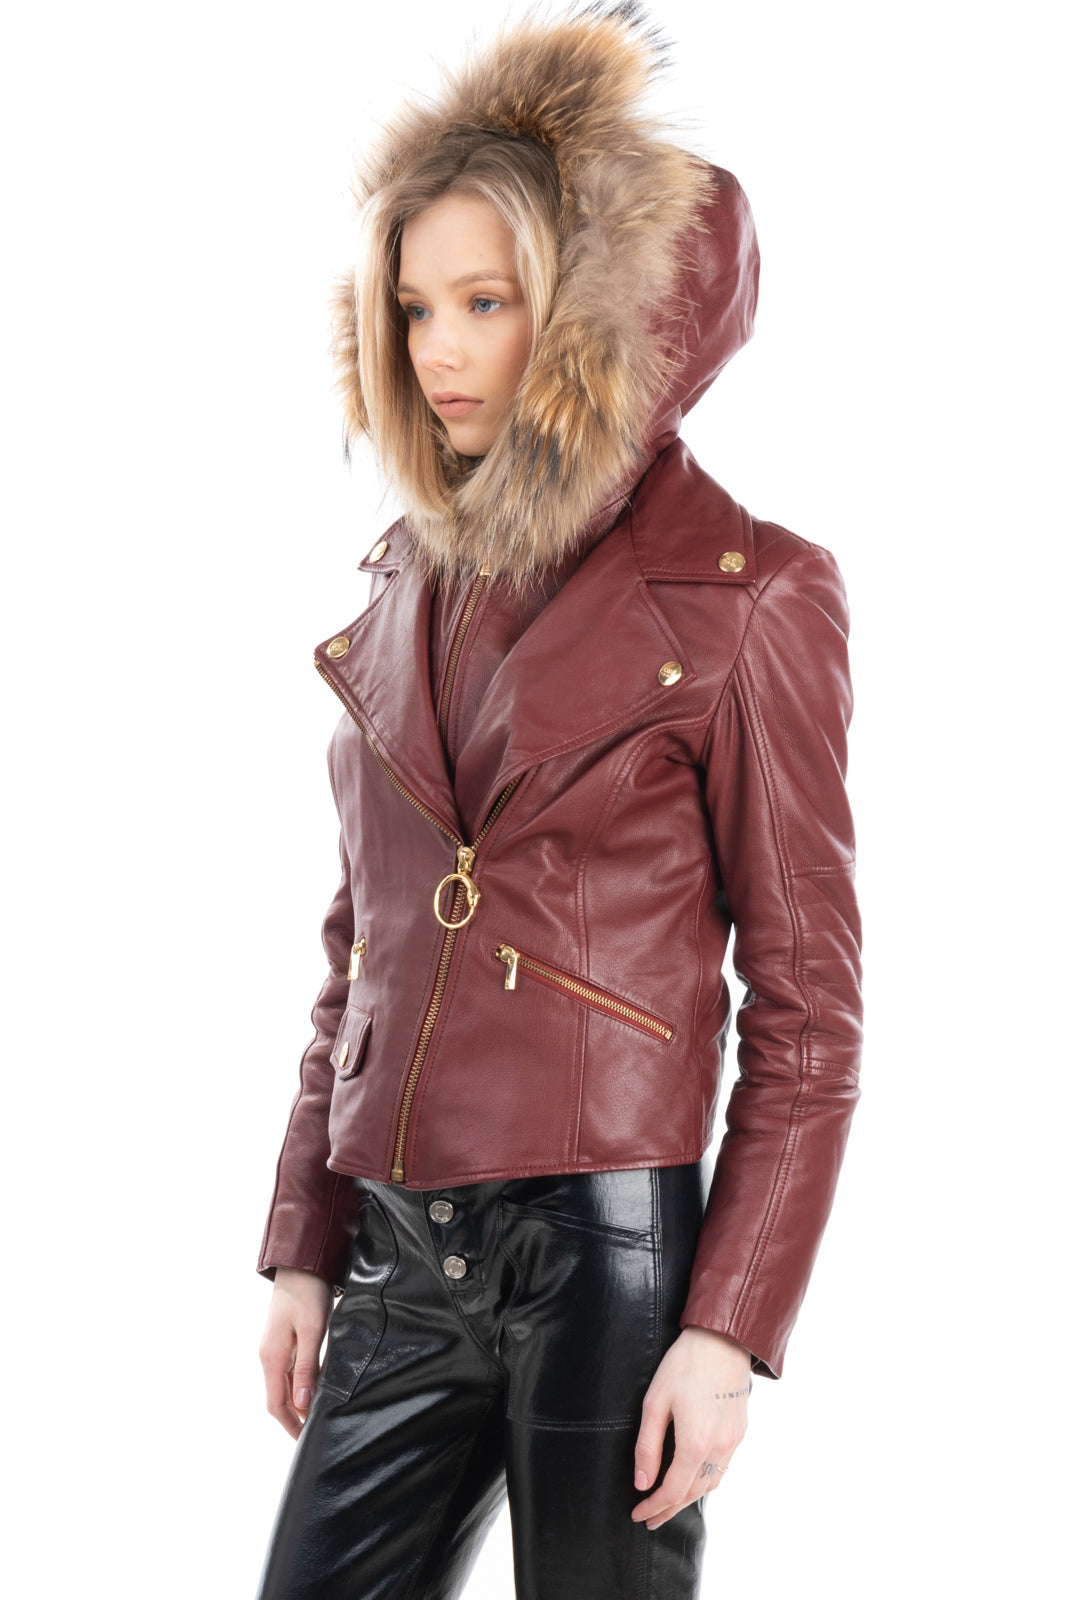 stemning Udrydde forudsætning RRP€1450 ROBERTO CAVALLI CLASS Leather Jacket Size 40 / S Padded Detac  –POPPRI Online Fashion Auctions